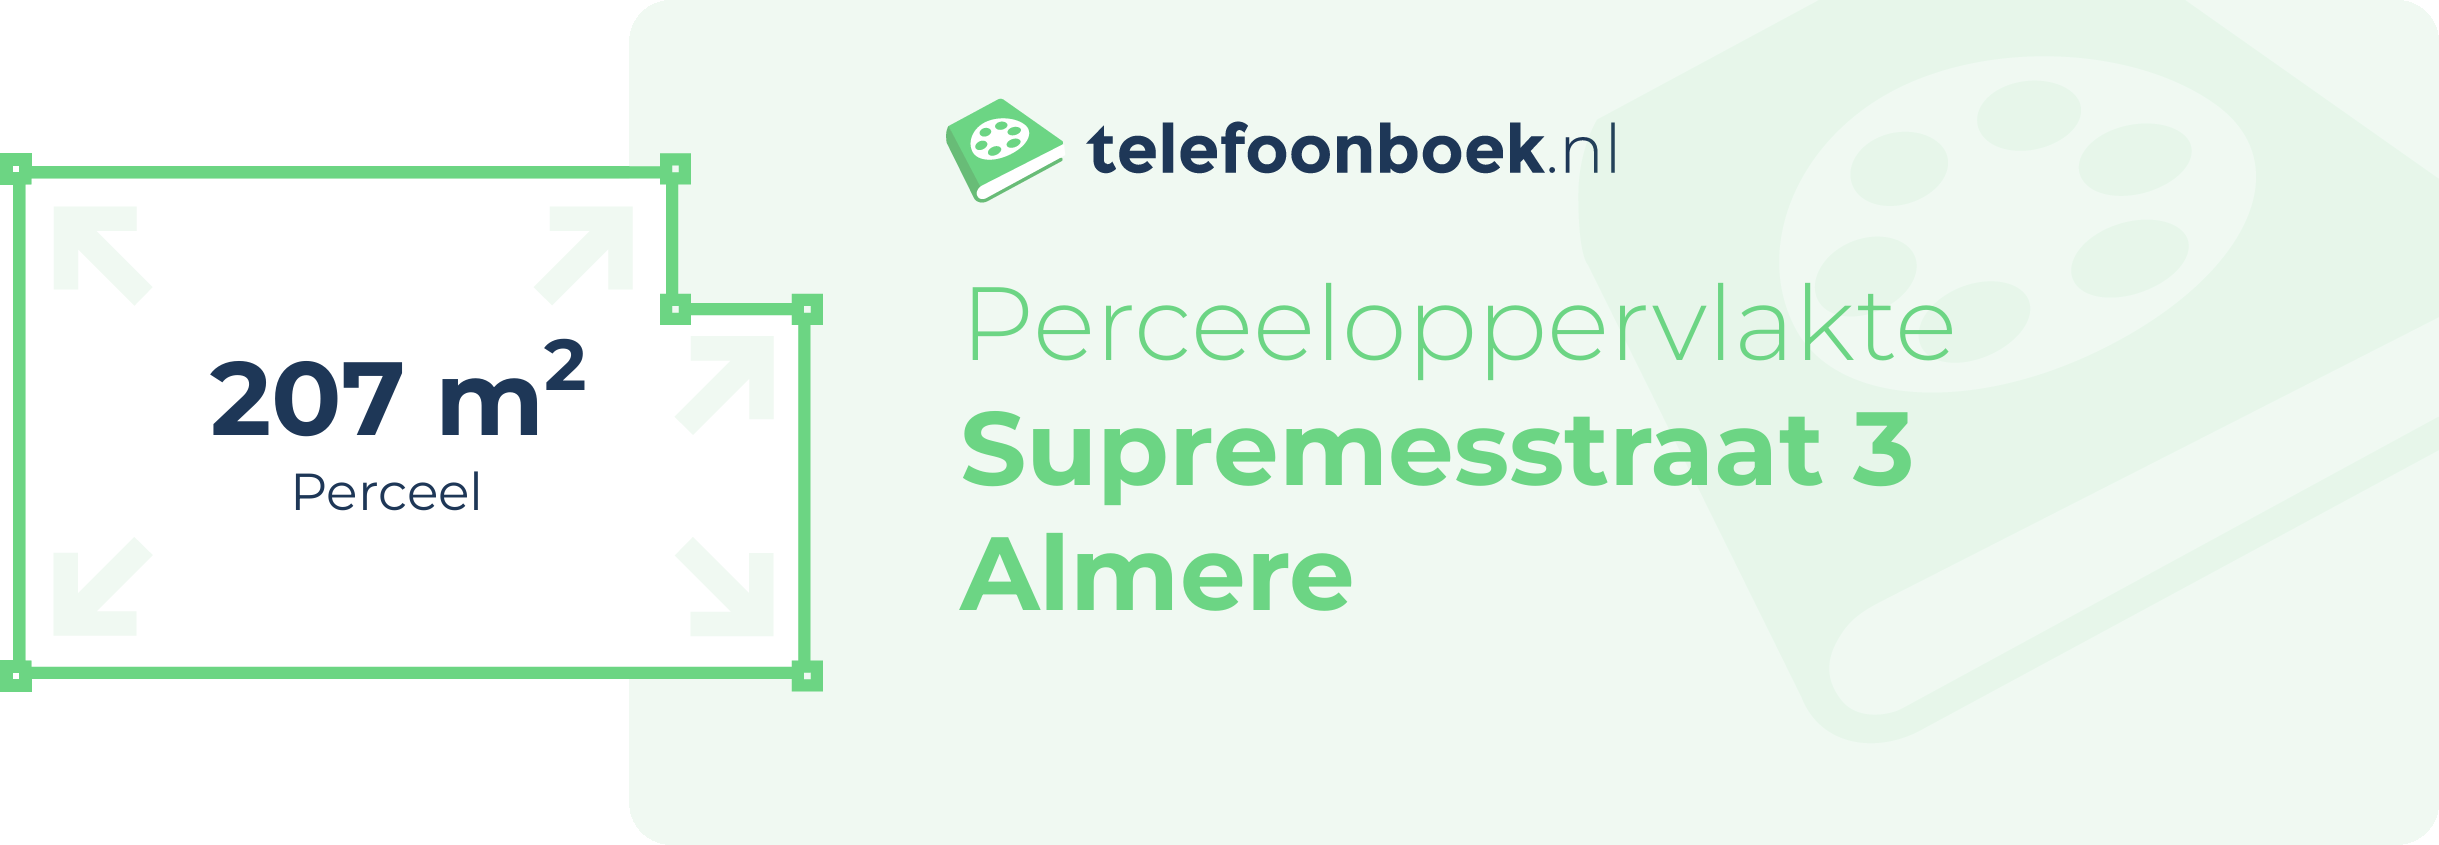 Perceeloppervlakte Supremesstraat 3 Almere